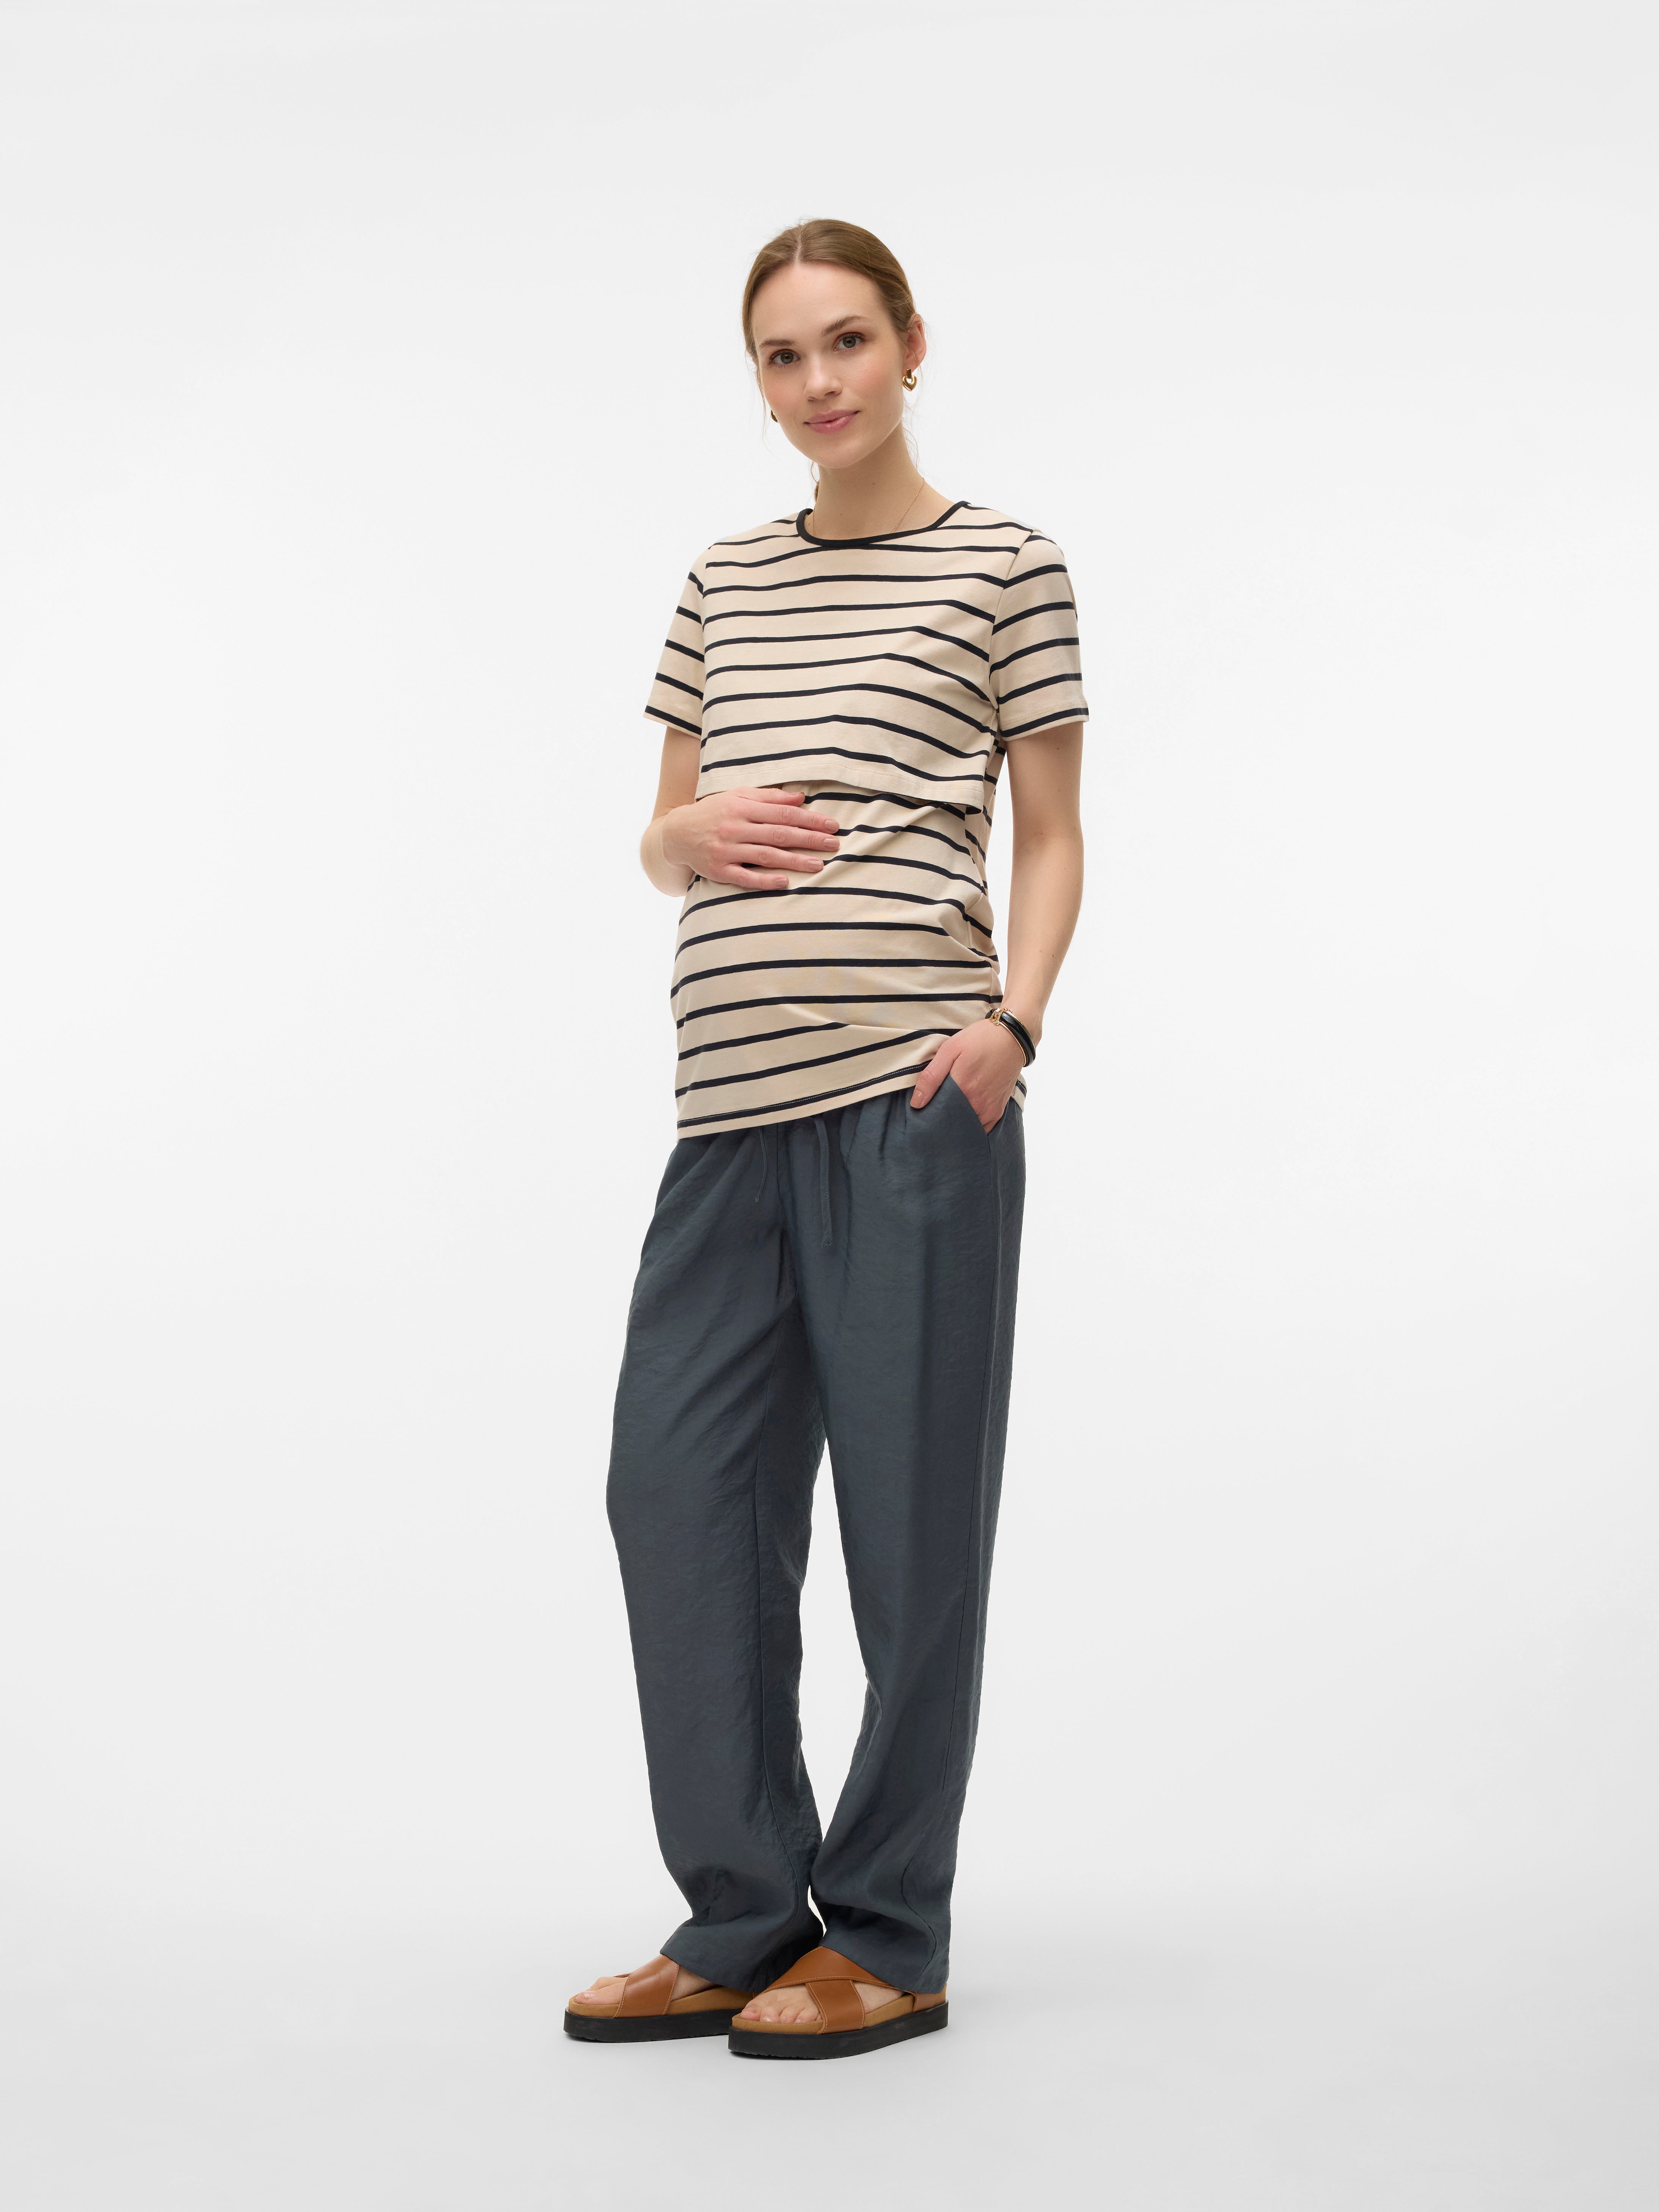 Emotion Moms Maternity Jeans For Pregnant Women Pregnancy Winter Warm Denim  Pants Maternity Clothes Pregnant Trousers - Jeans - AliExpress